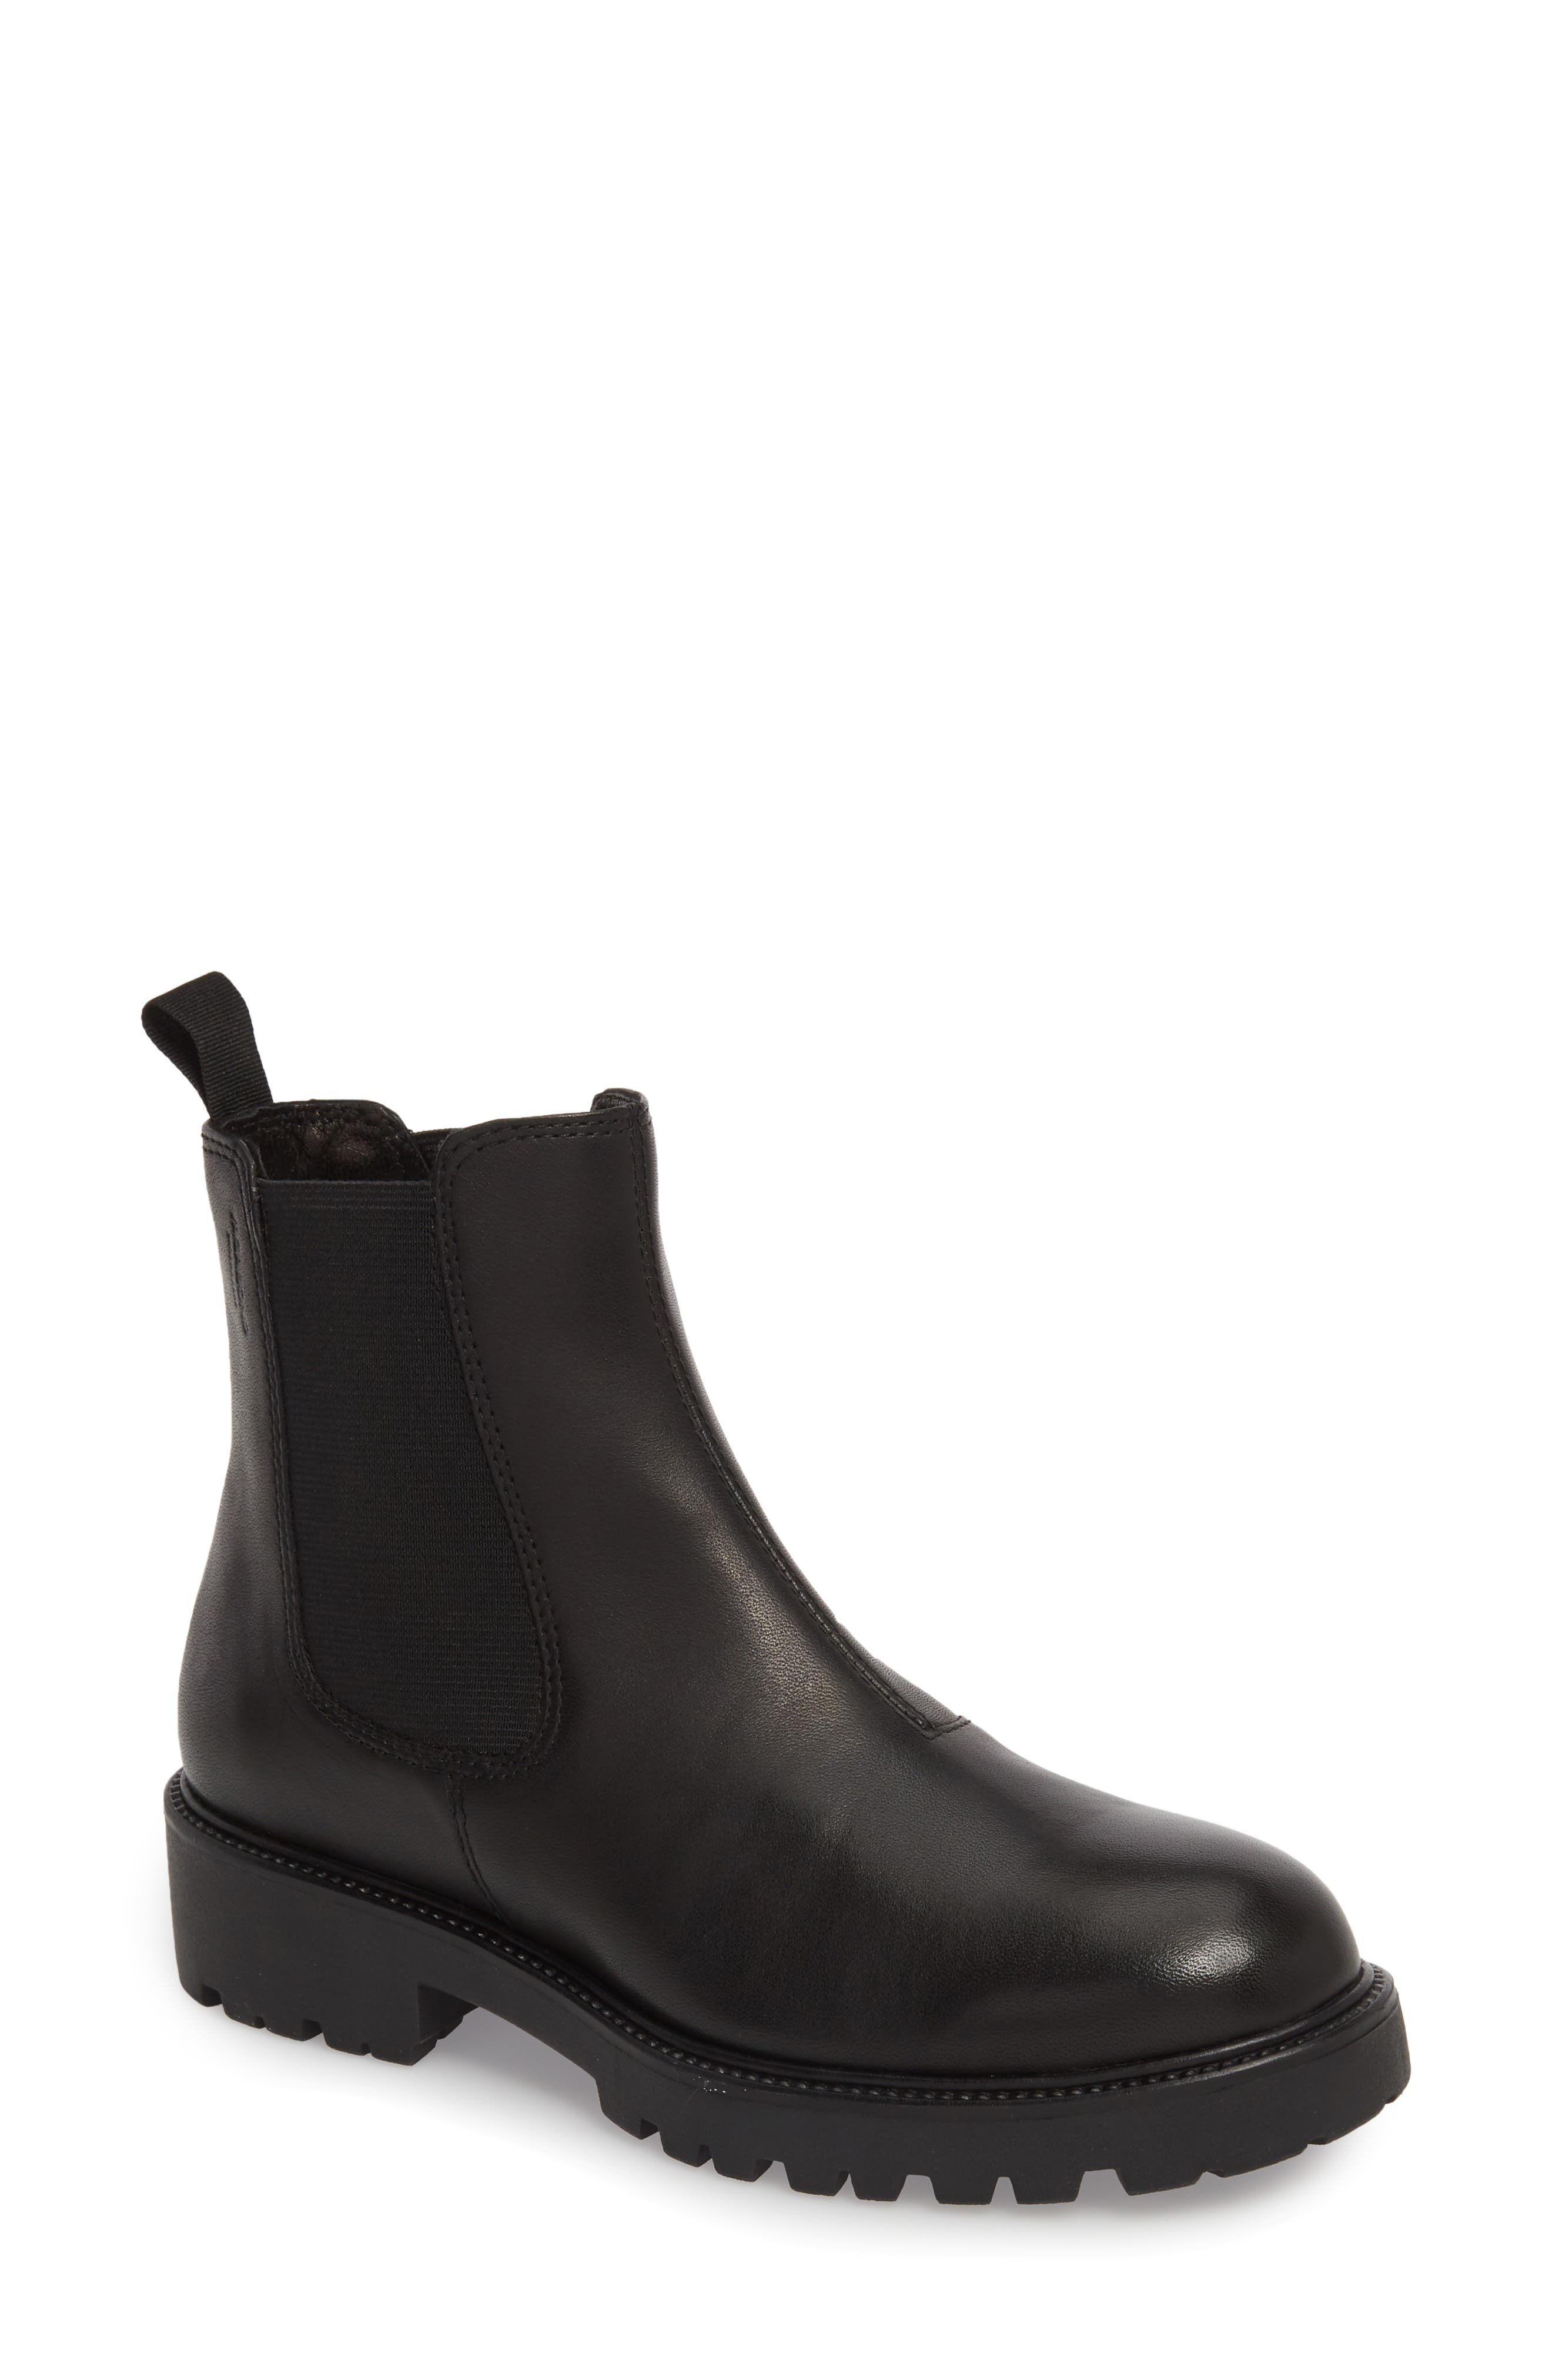 kenova black leather boots